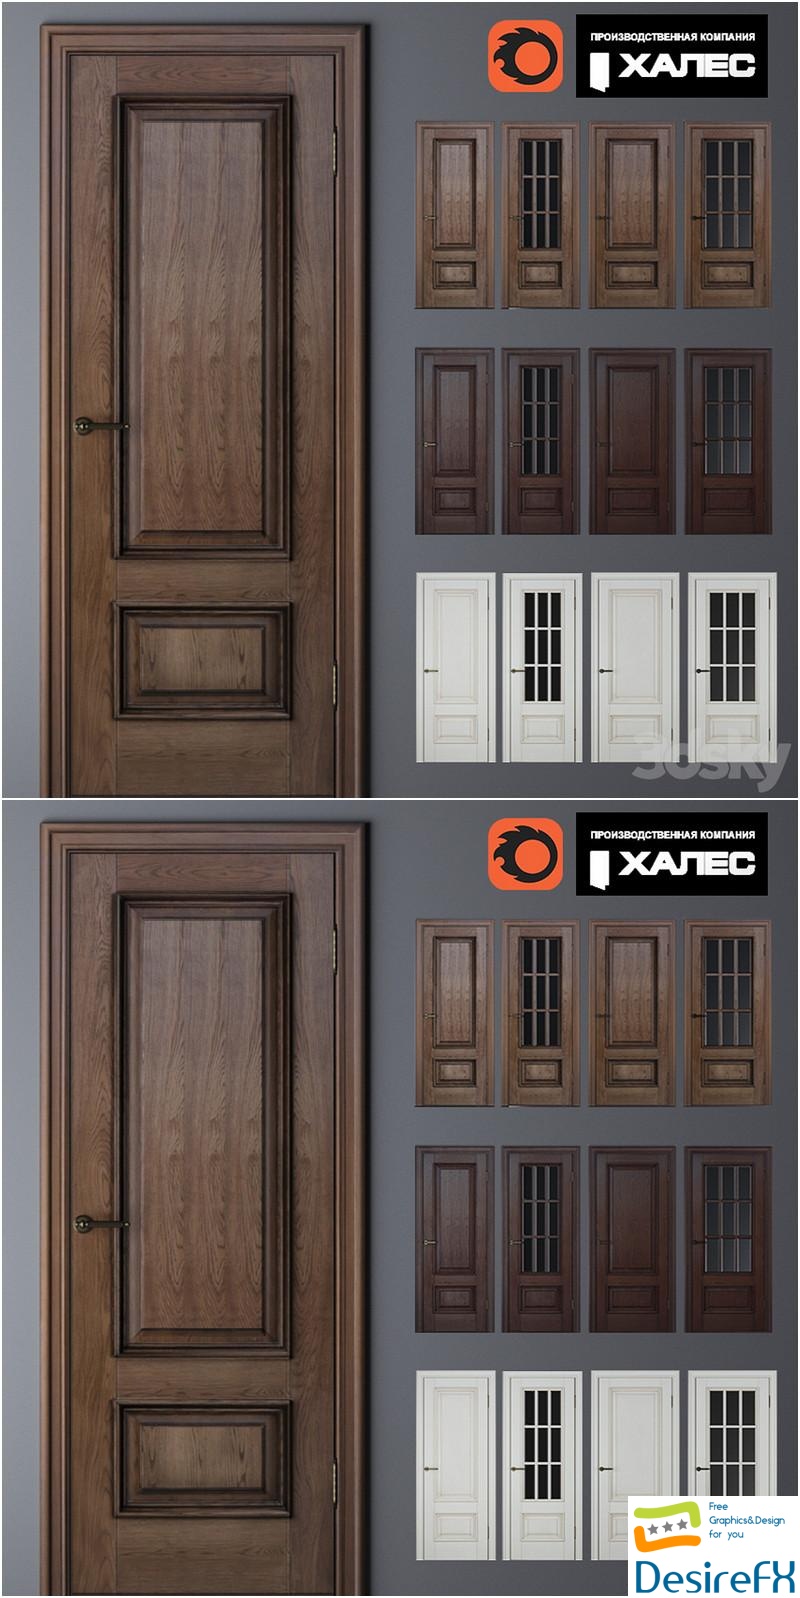 Romulus Doors from Hales 3D Model